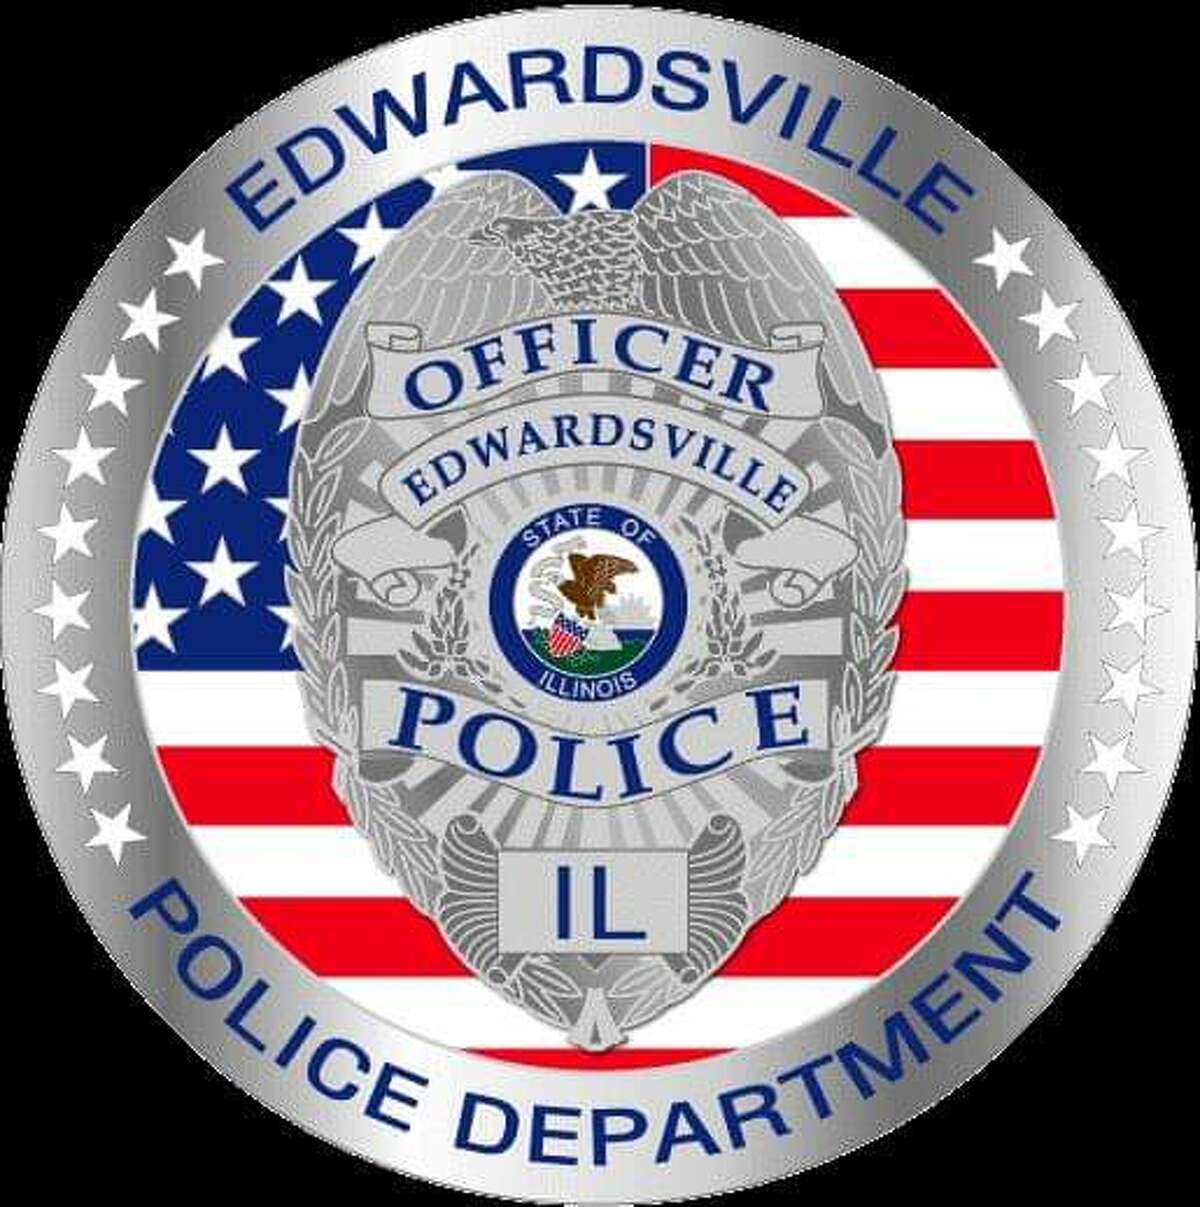 Edwardsville Police